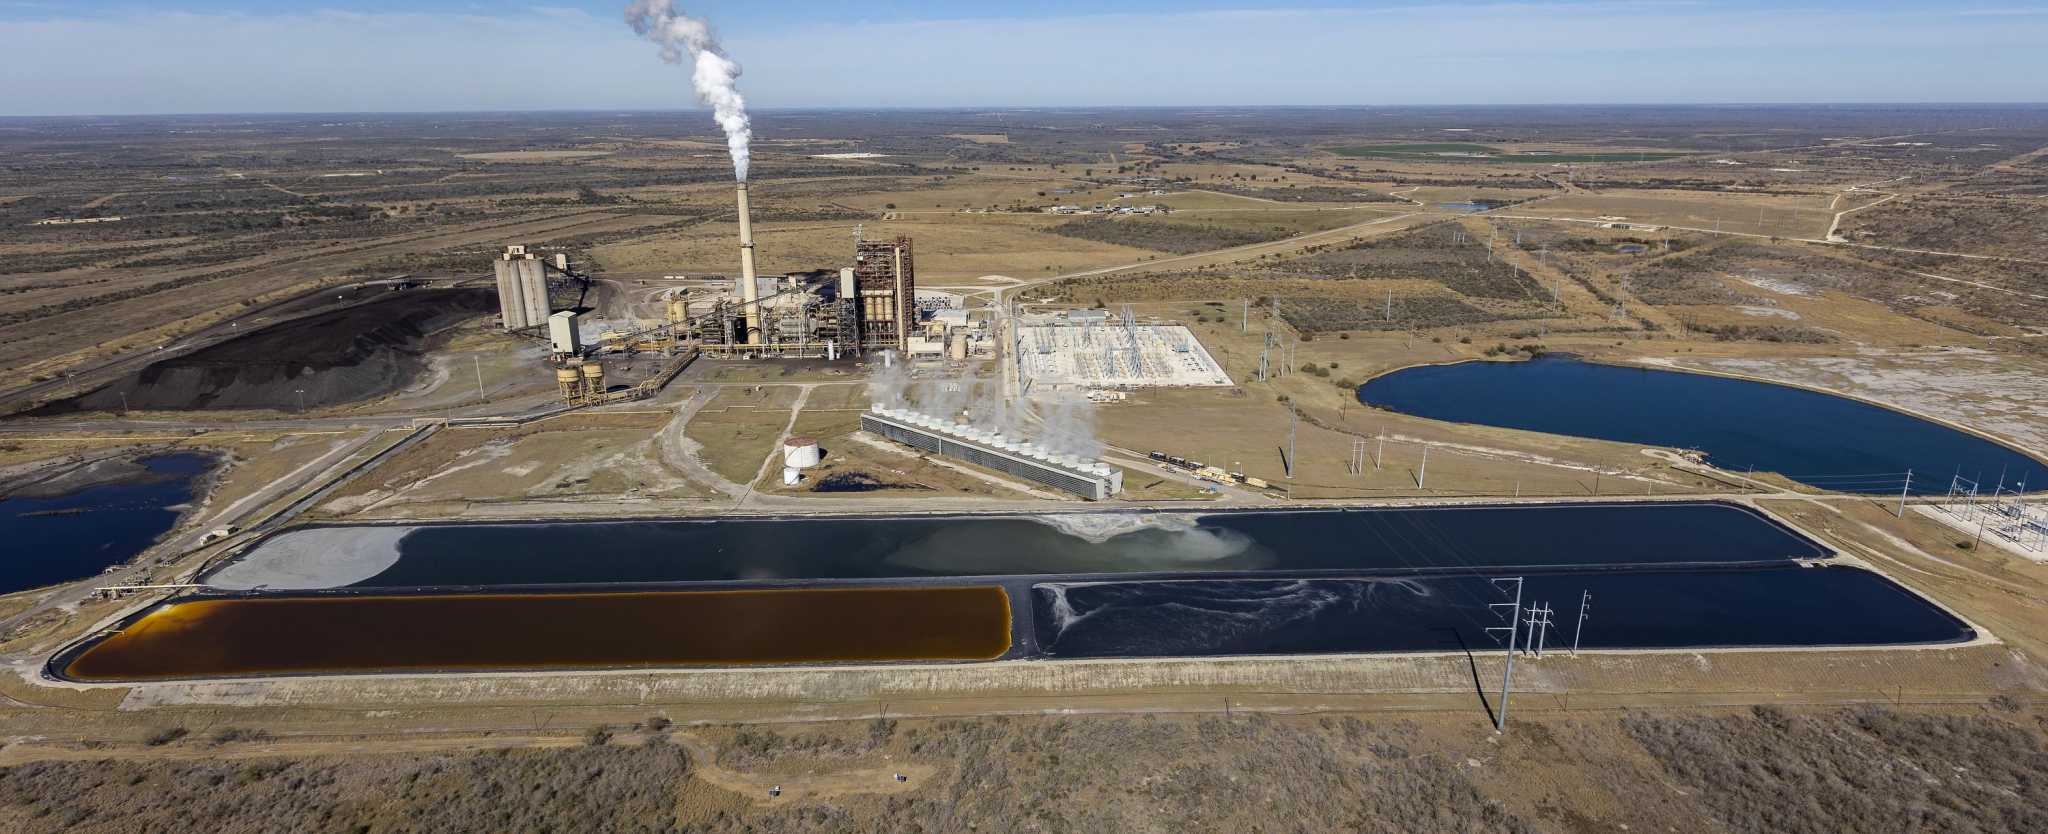 Texas Permits Lignite Mine Expansion Despite Water Worries